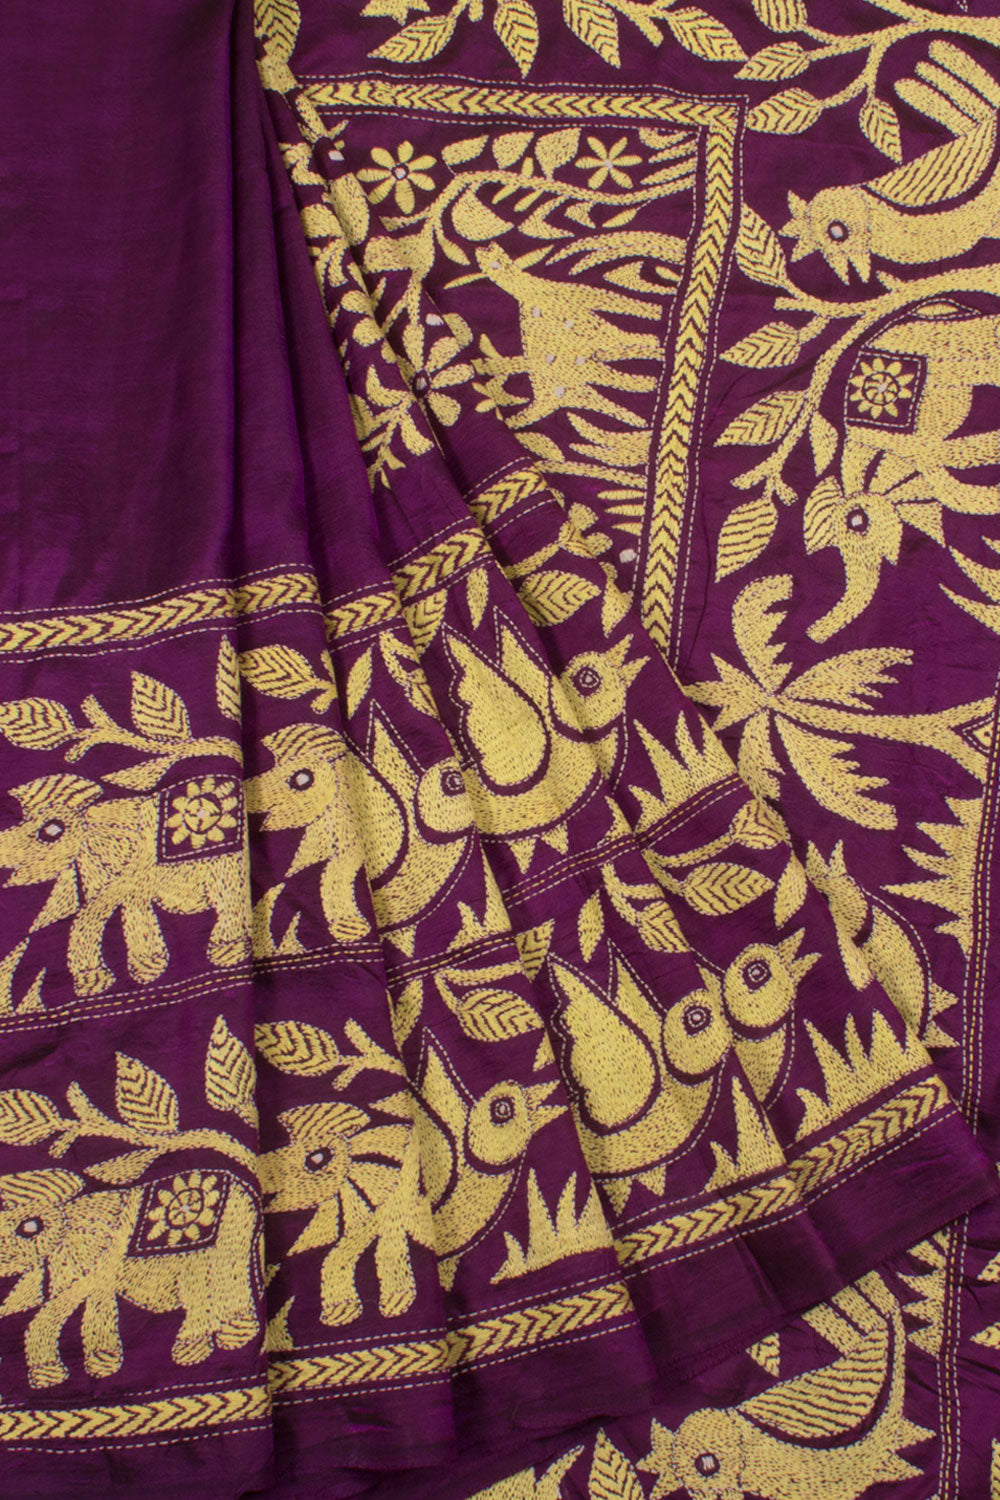 Handloom Half and Half Kantha Embroidered Silk Saree with Elephant, Bird, Floral Design